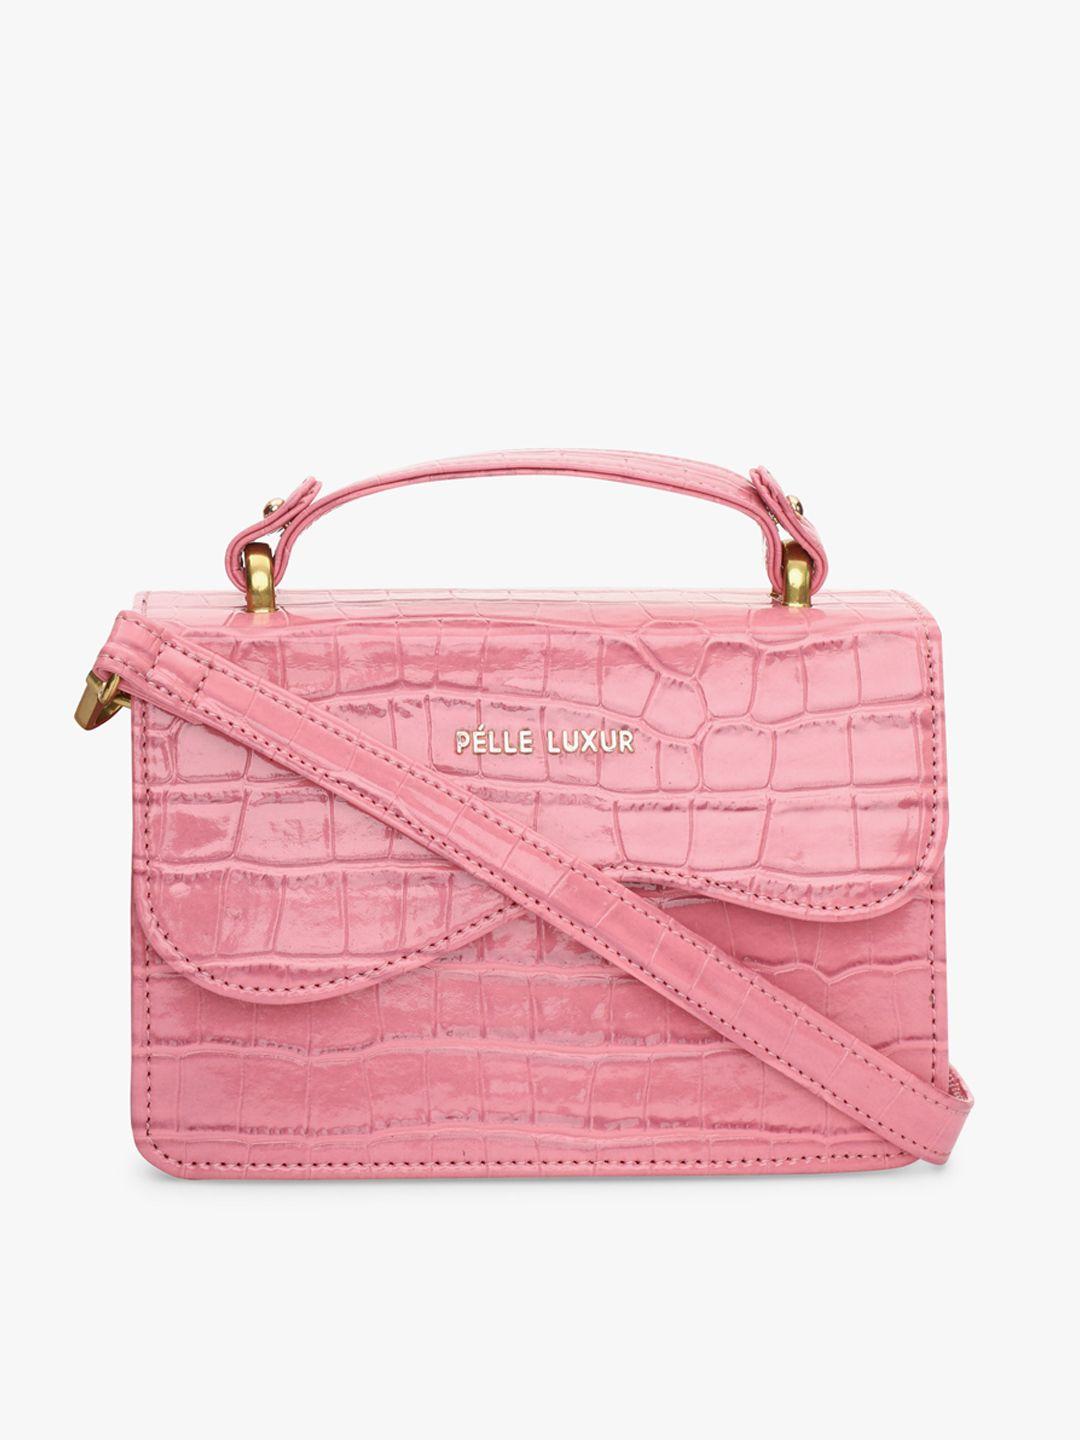 pelle luxur women textured miniature satchel